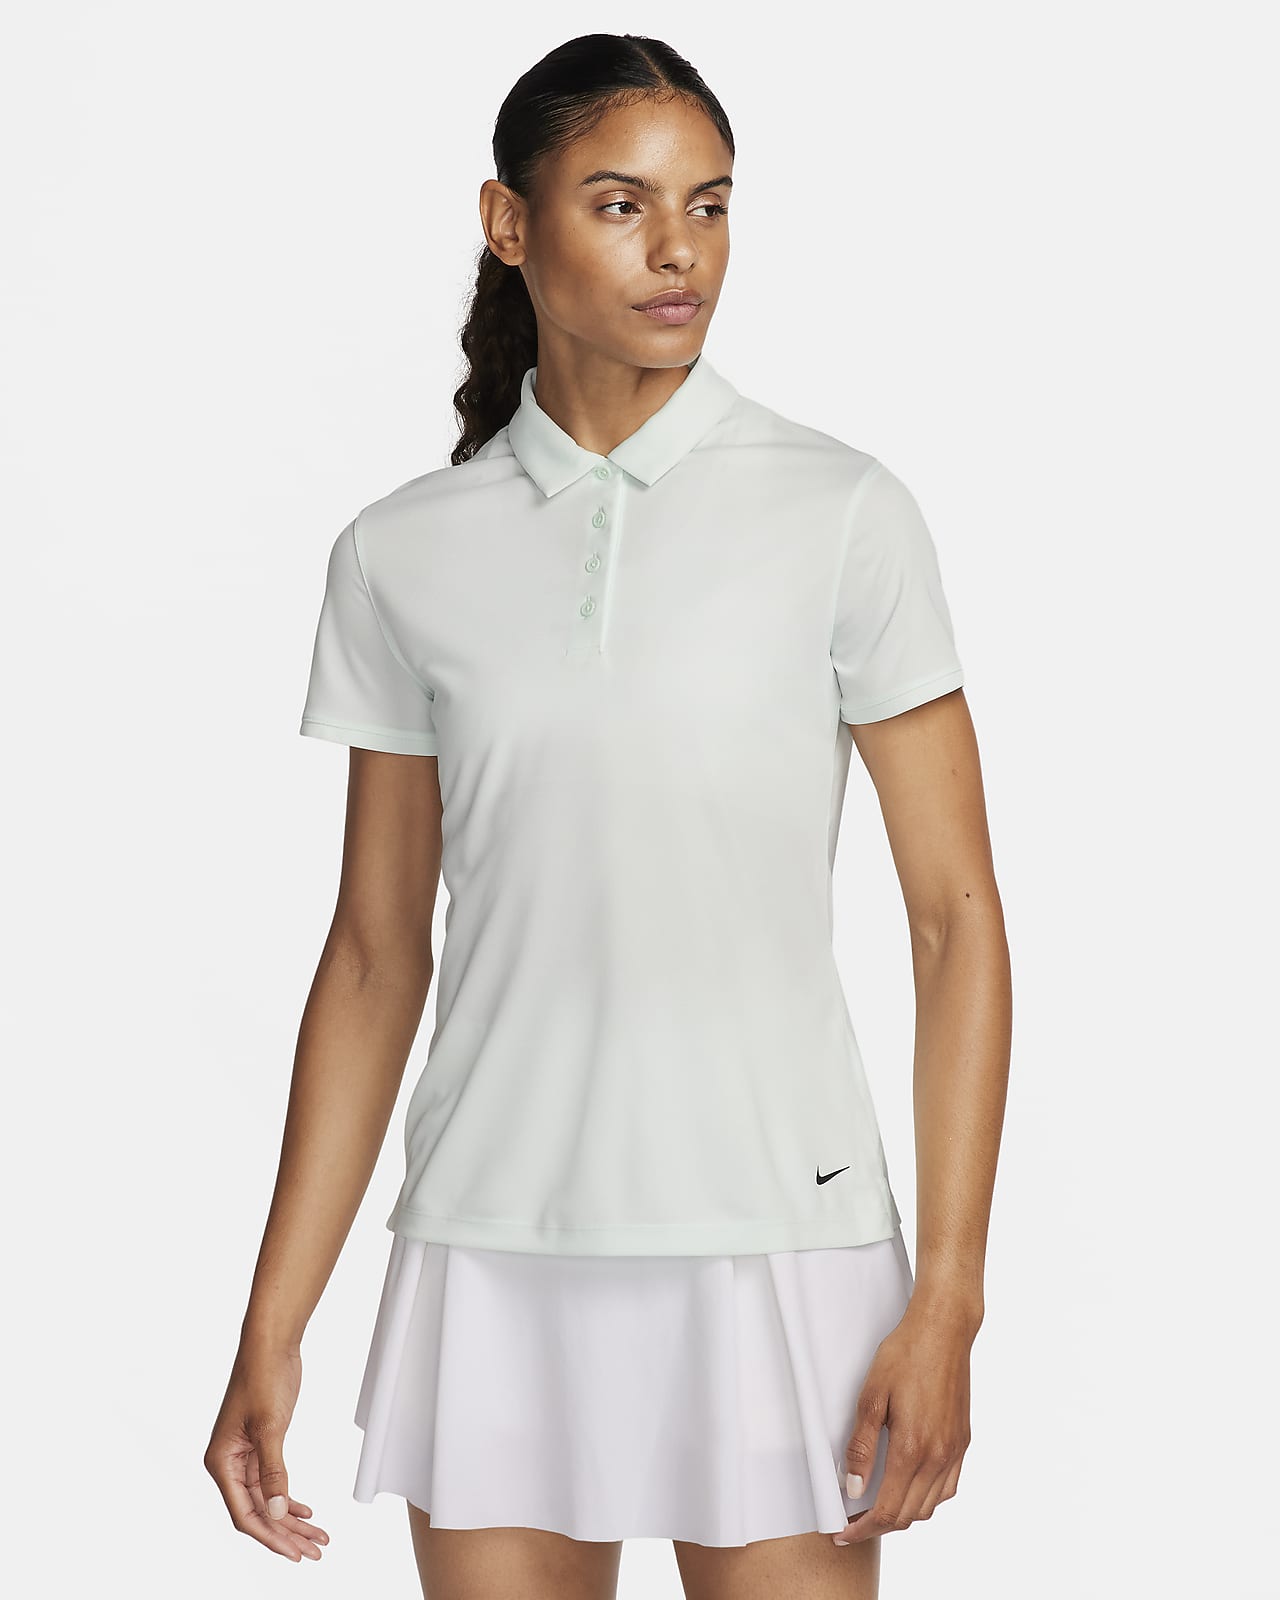 Nike Dri-FIT Victory Women's Golf Polo.